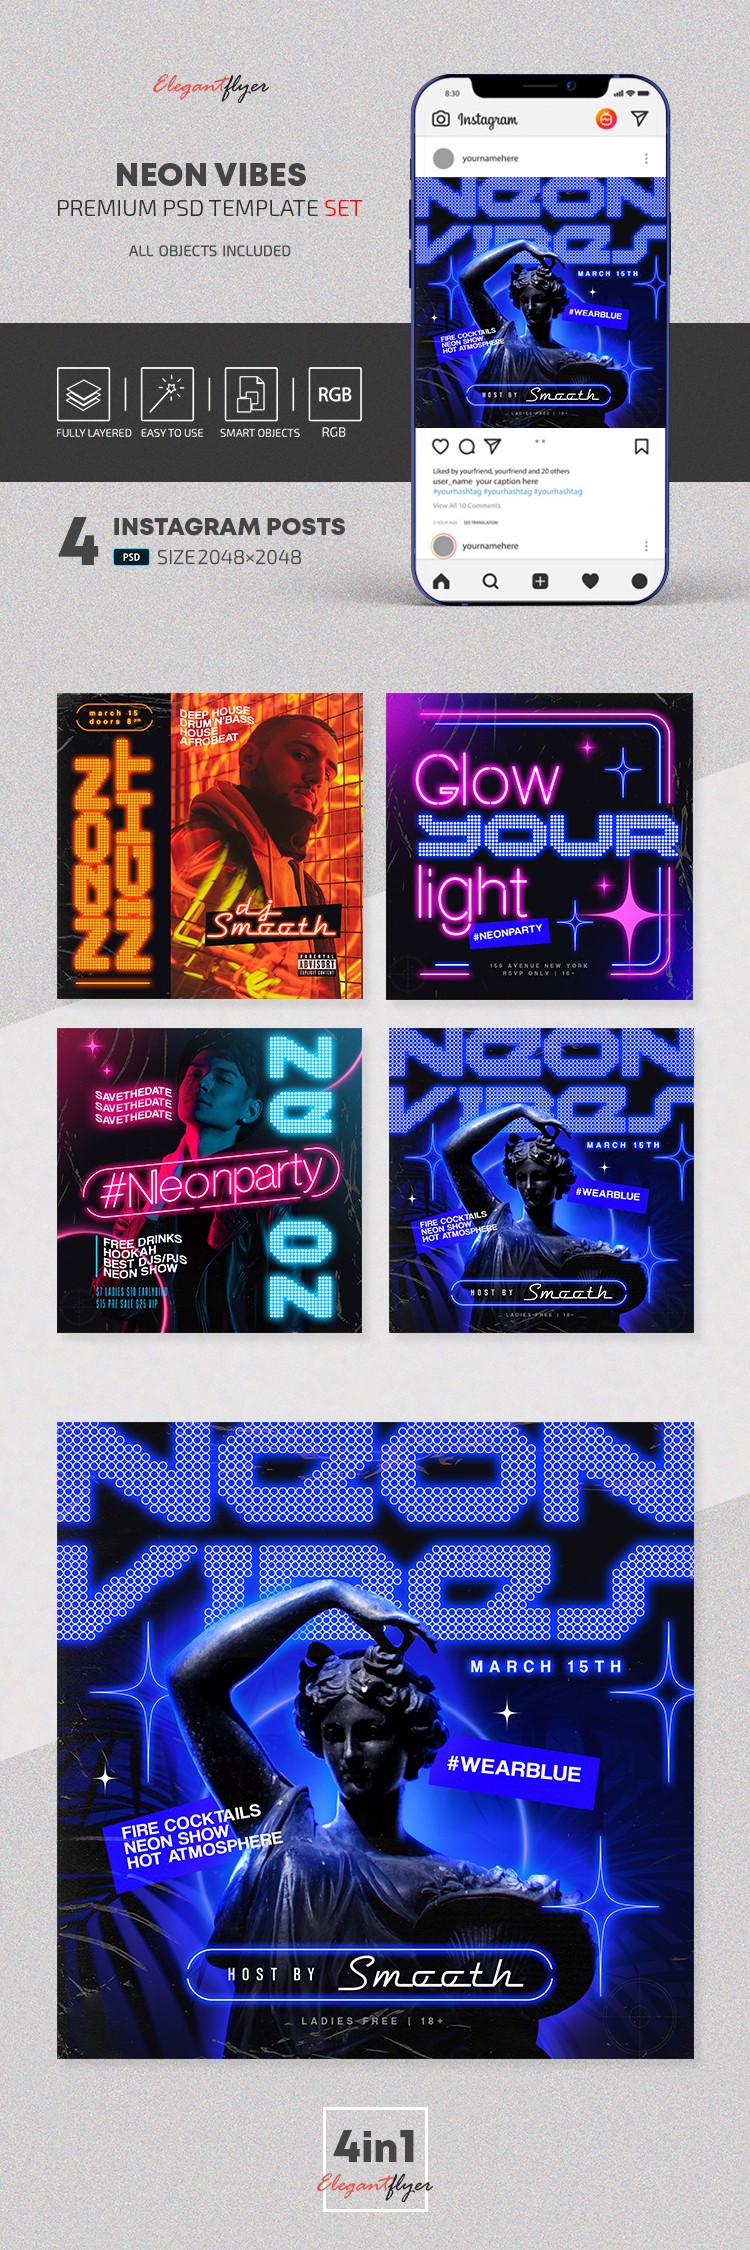 Festa de Vibrações Neon by ElegantFlyer